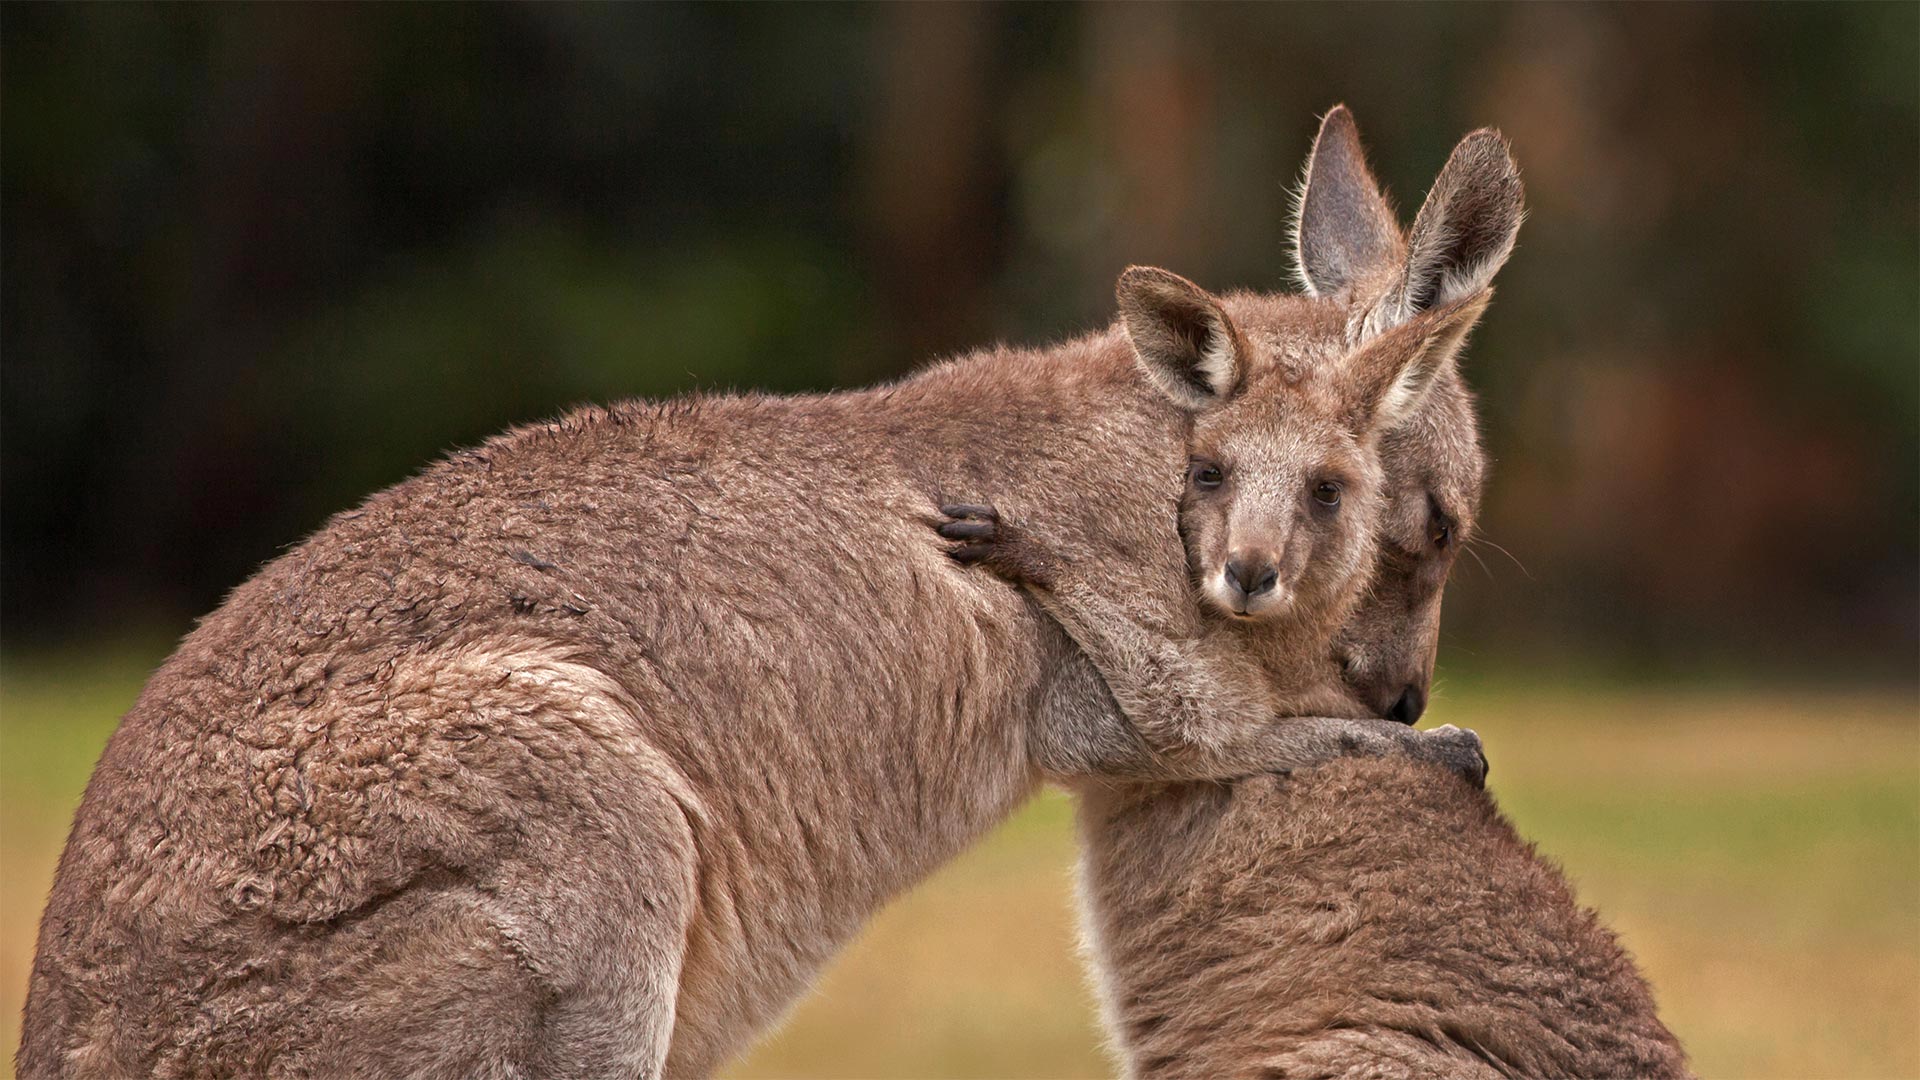 Kangaroo mother and baby